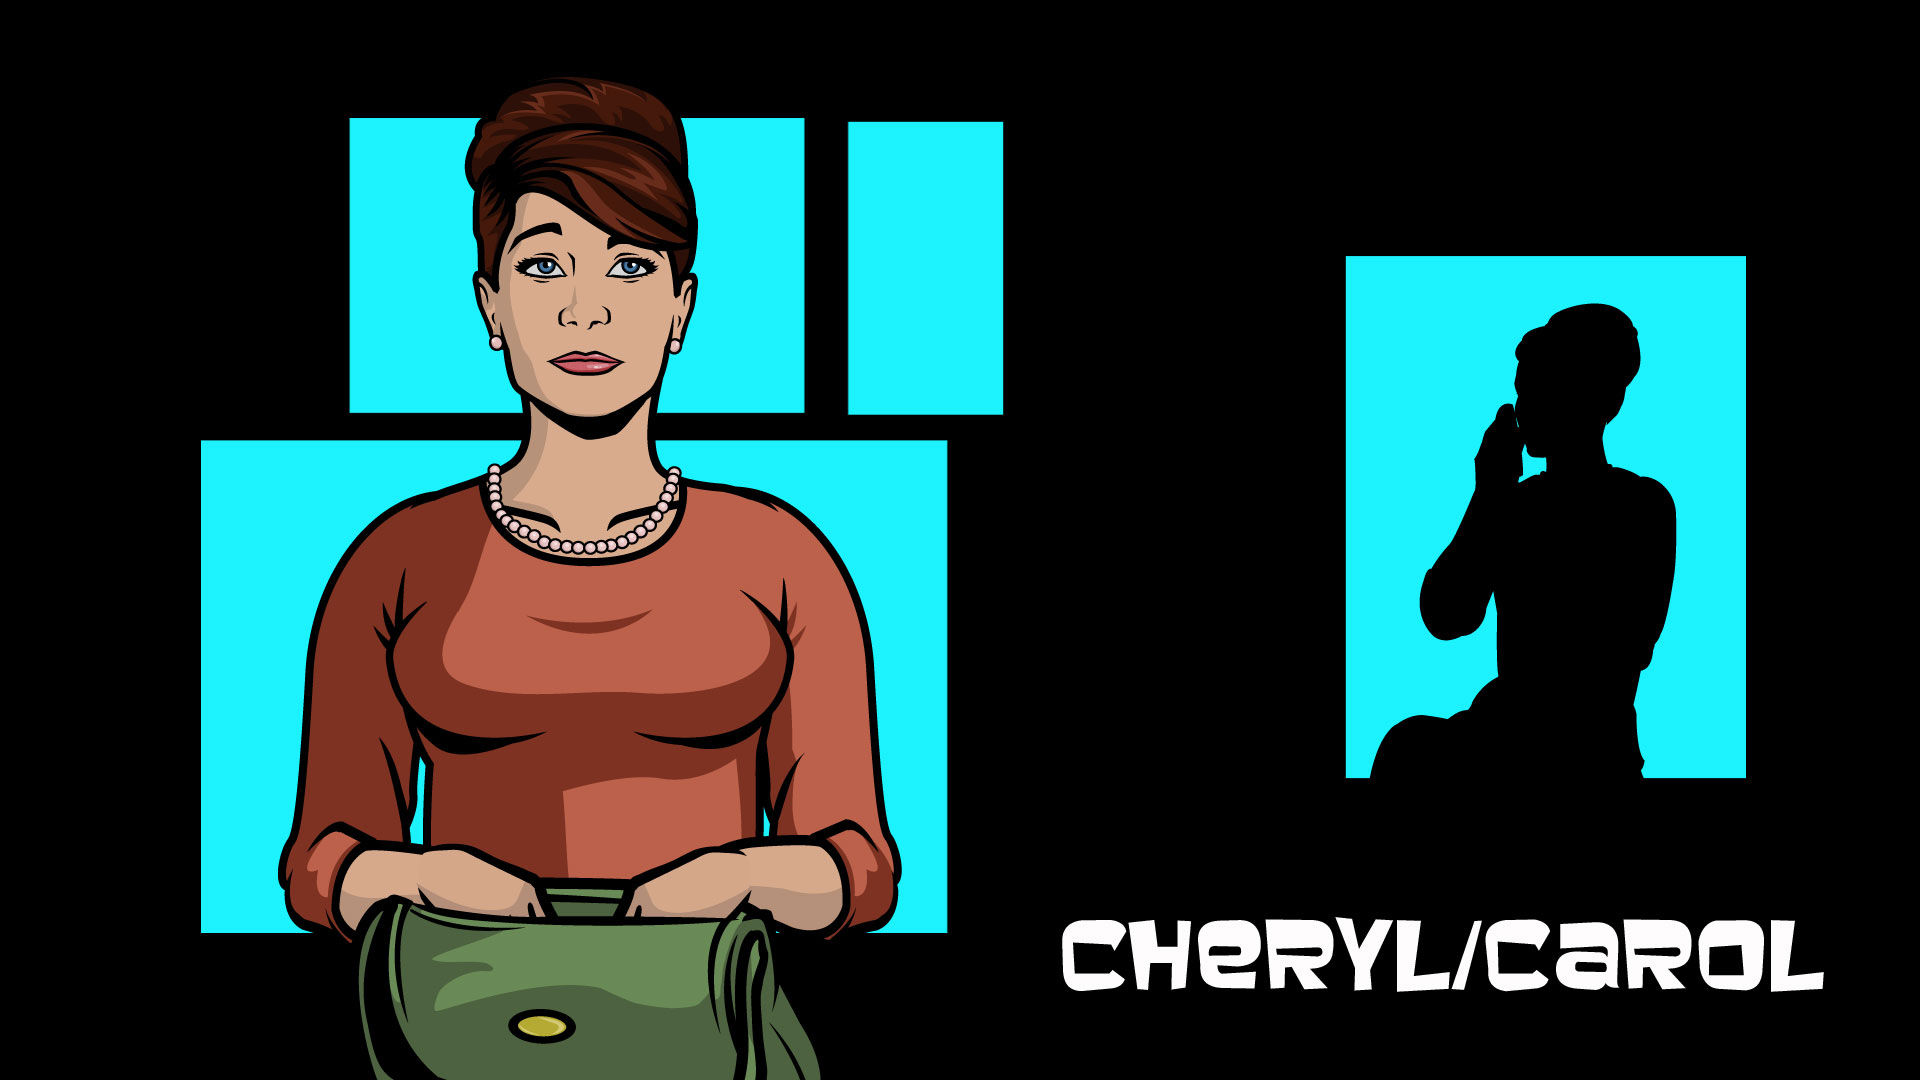 ARCHER: "Cheryl" as voiced by Judy Greer